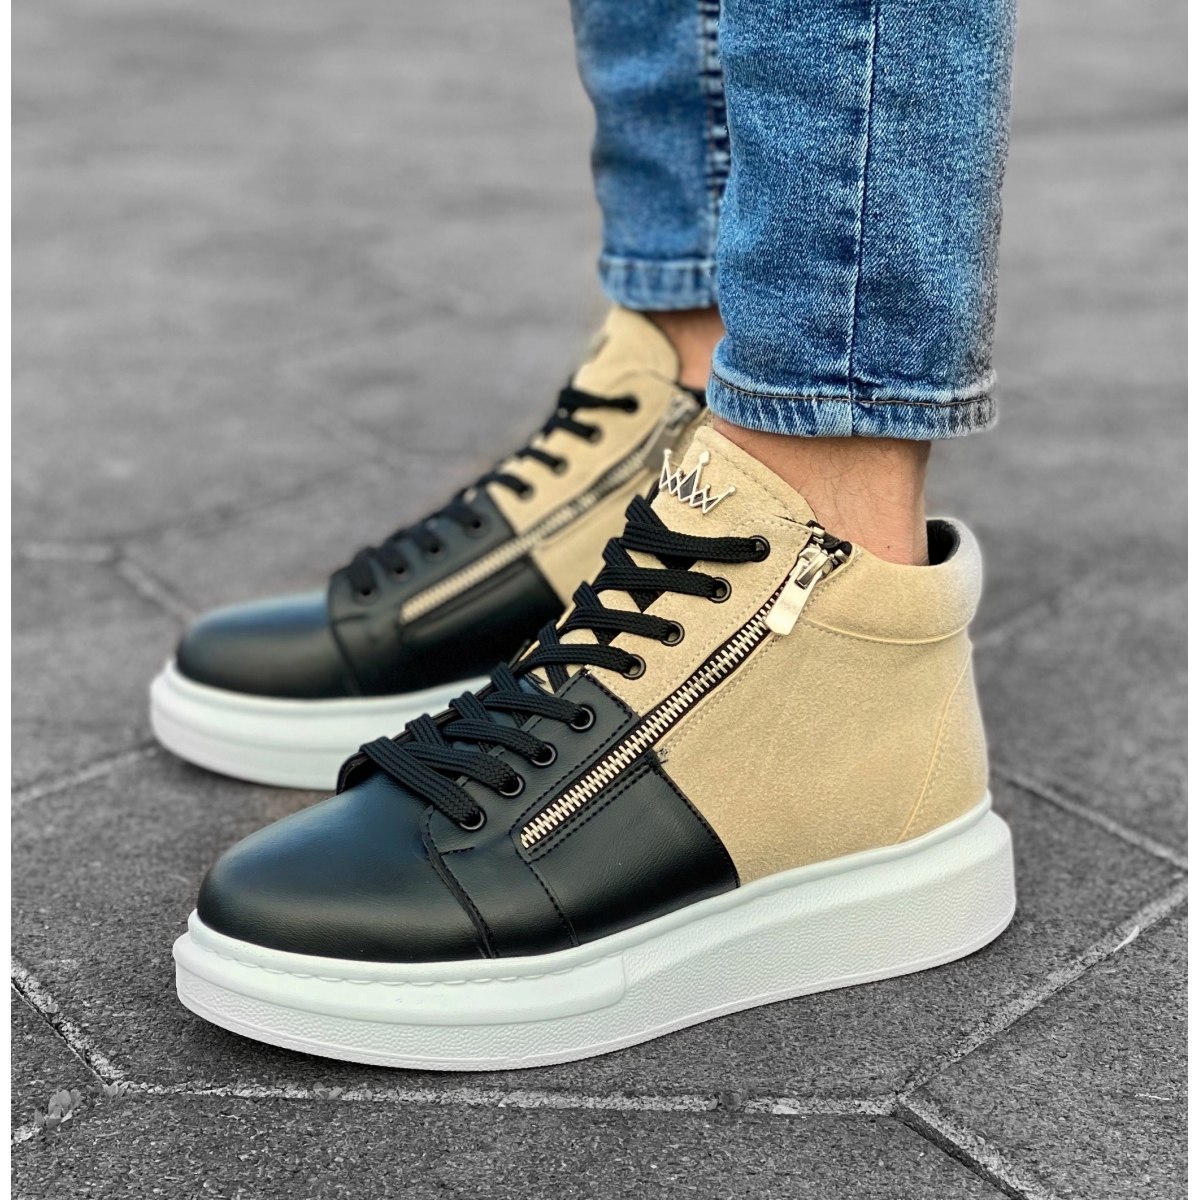 Herren High Top Sneakers Designer Schuhe mit Reissverschluss in creme-schwarz | Martin Valen